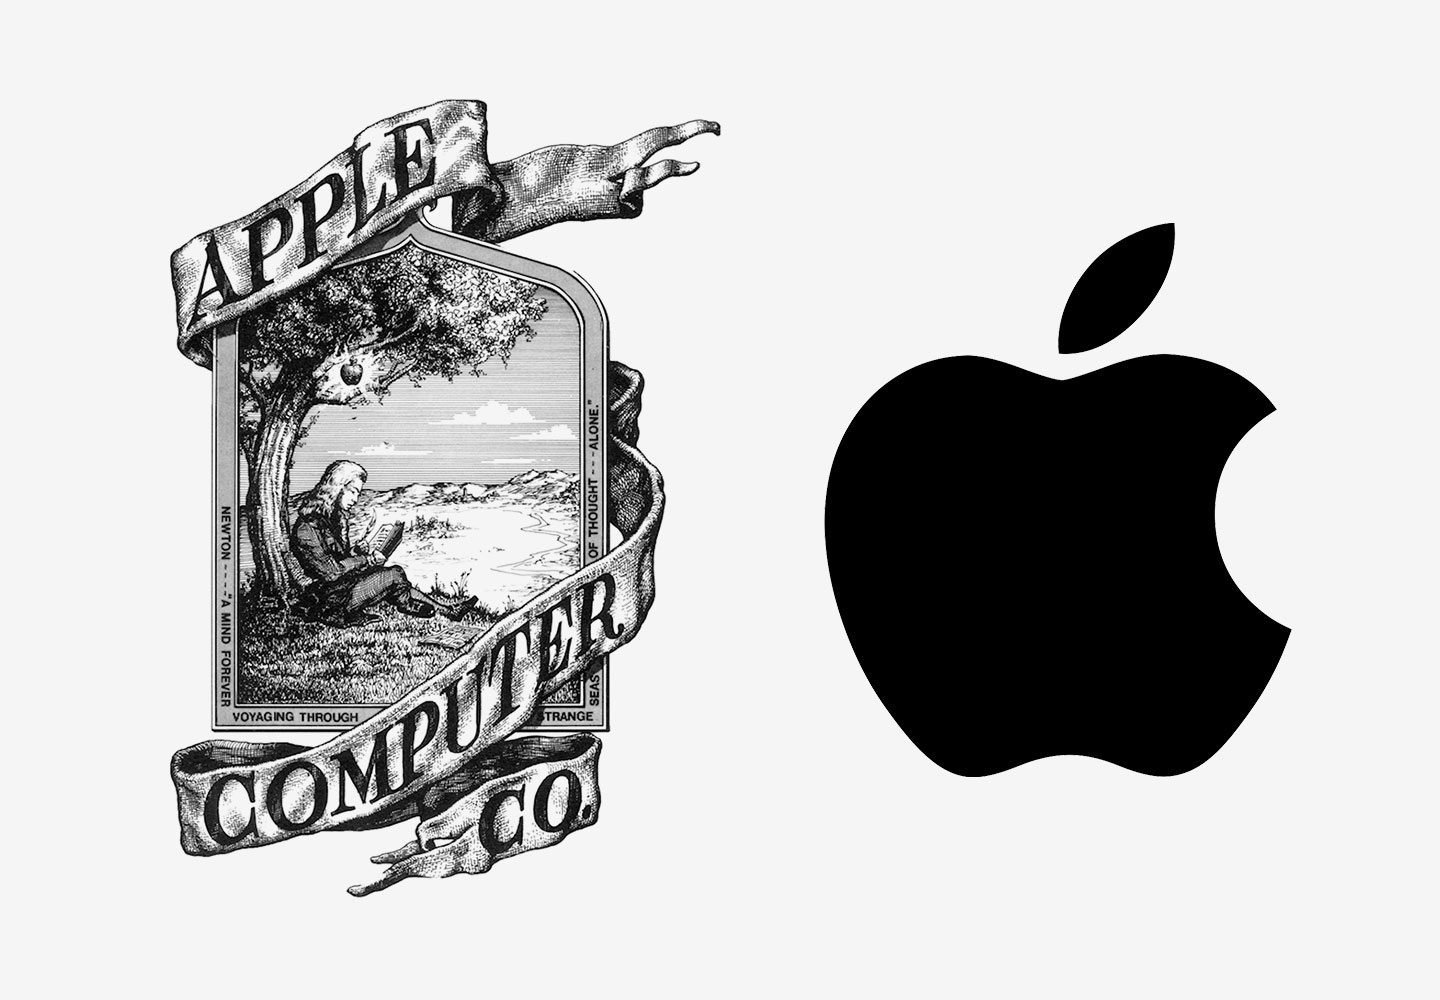 Apple Logos